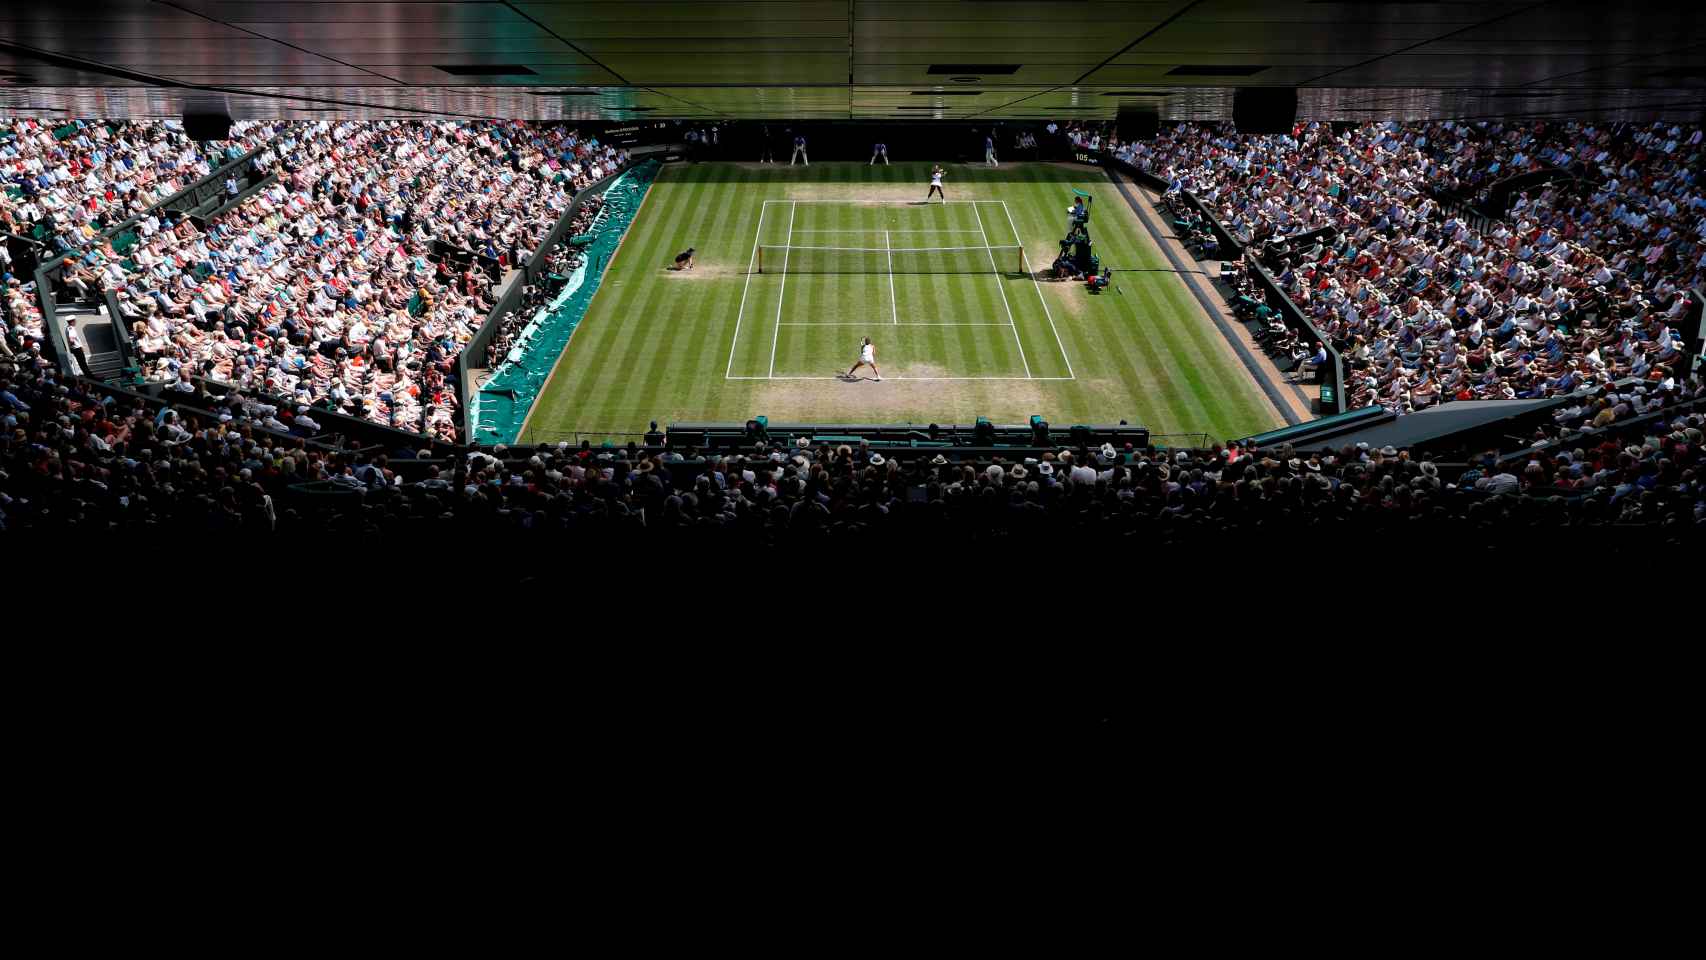 Pista central de Wimbledon